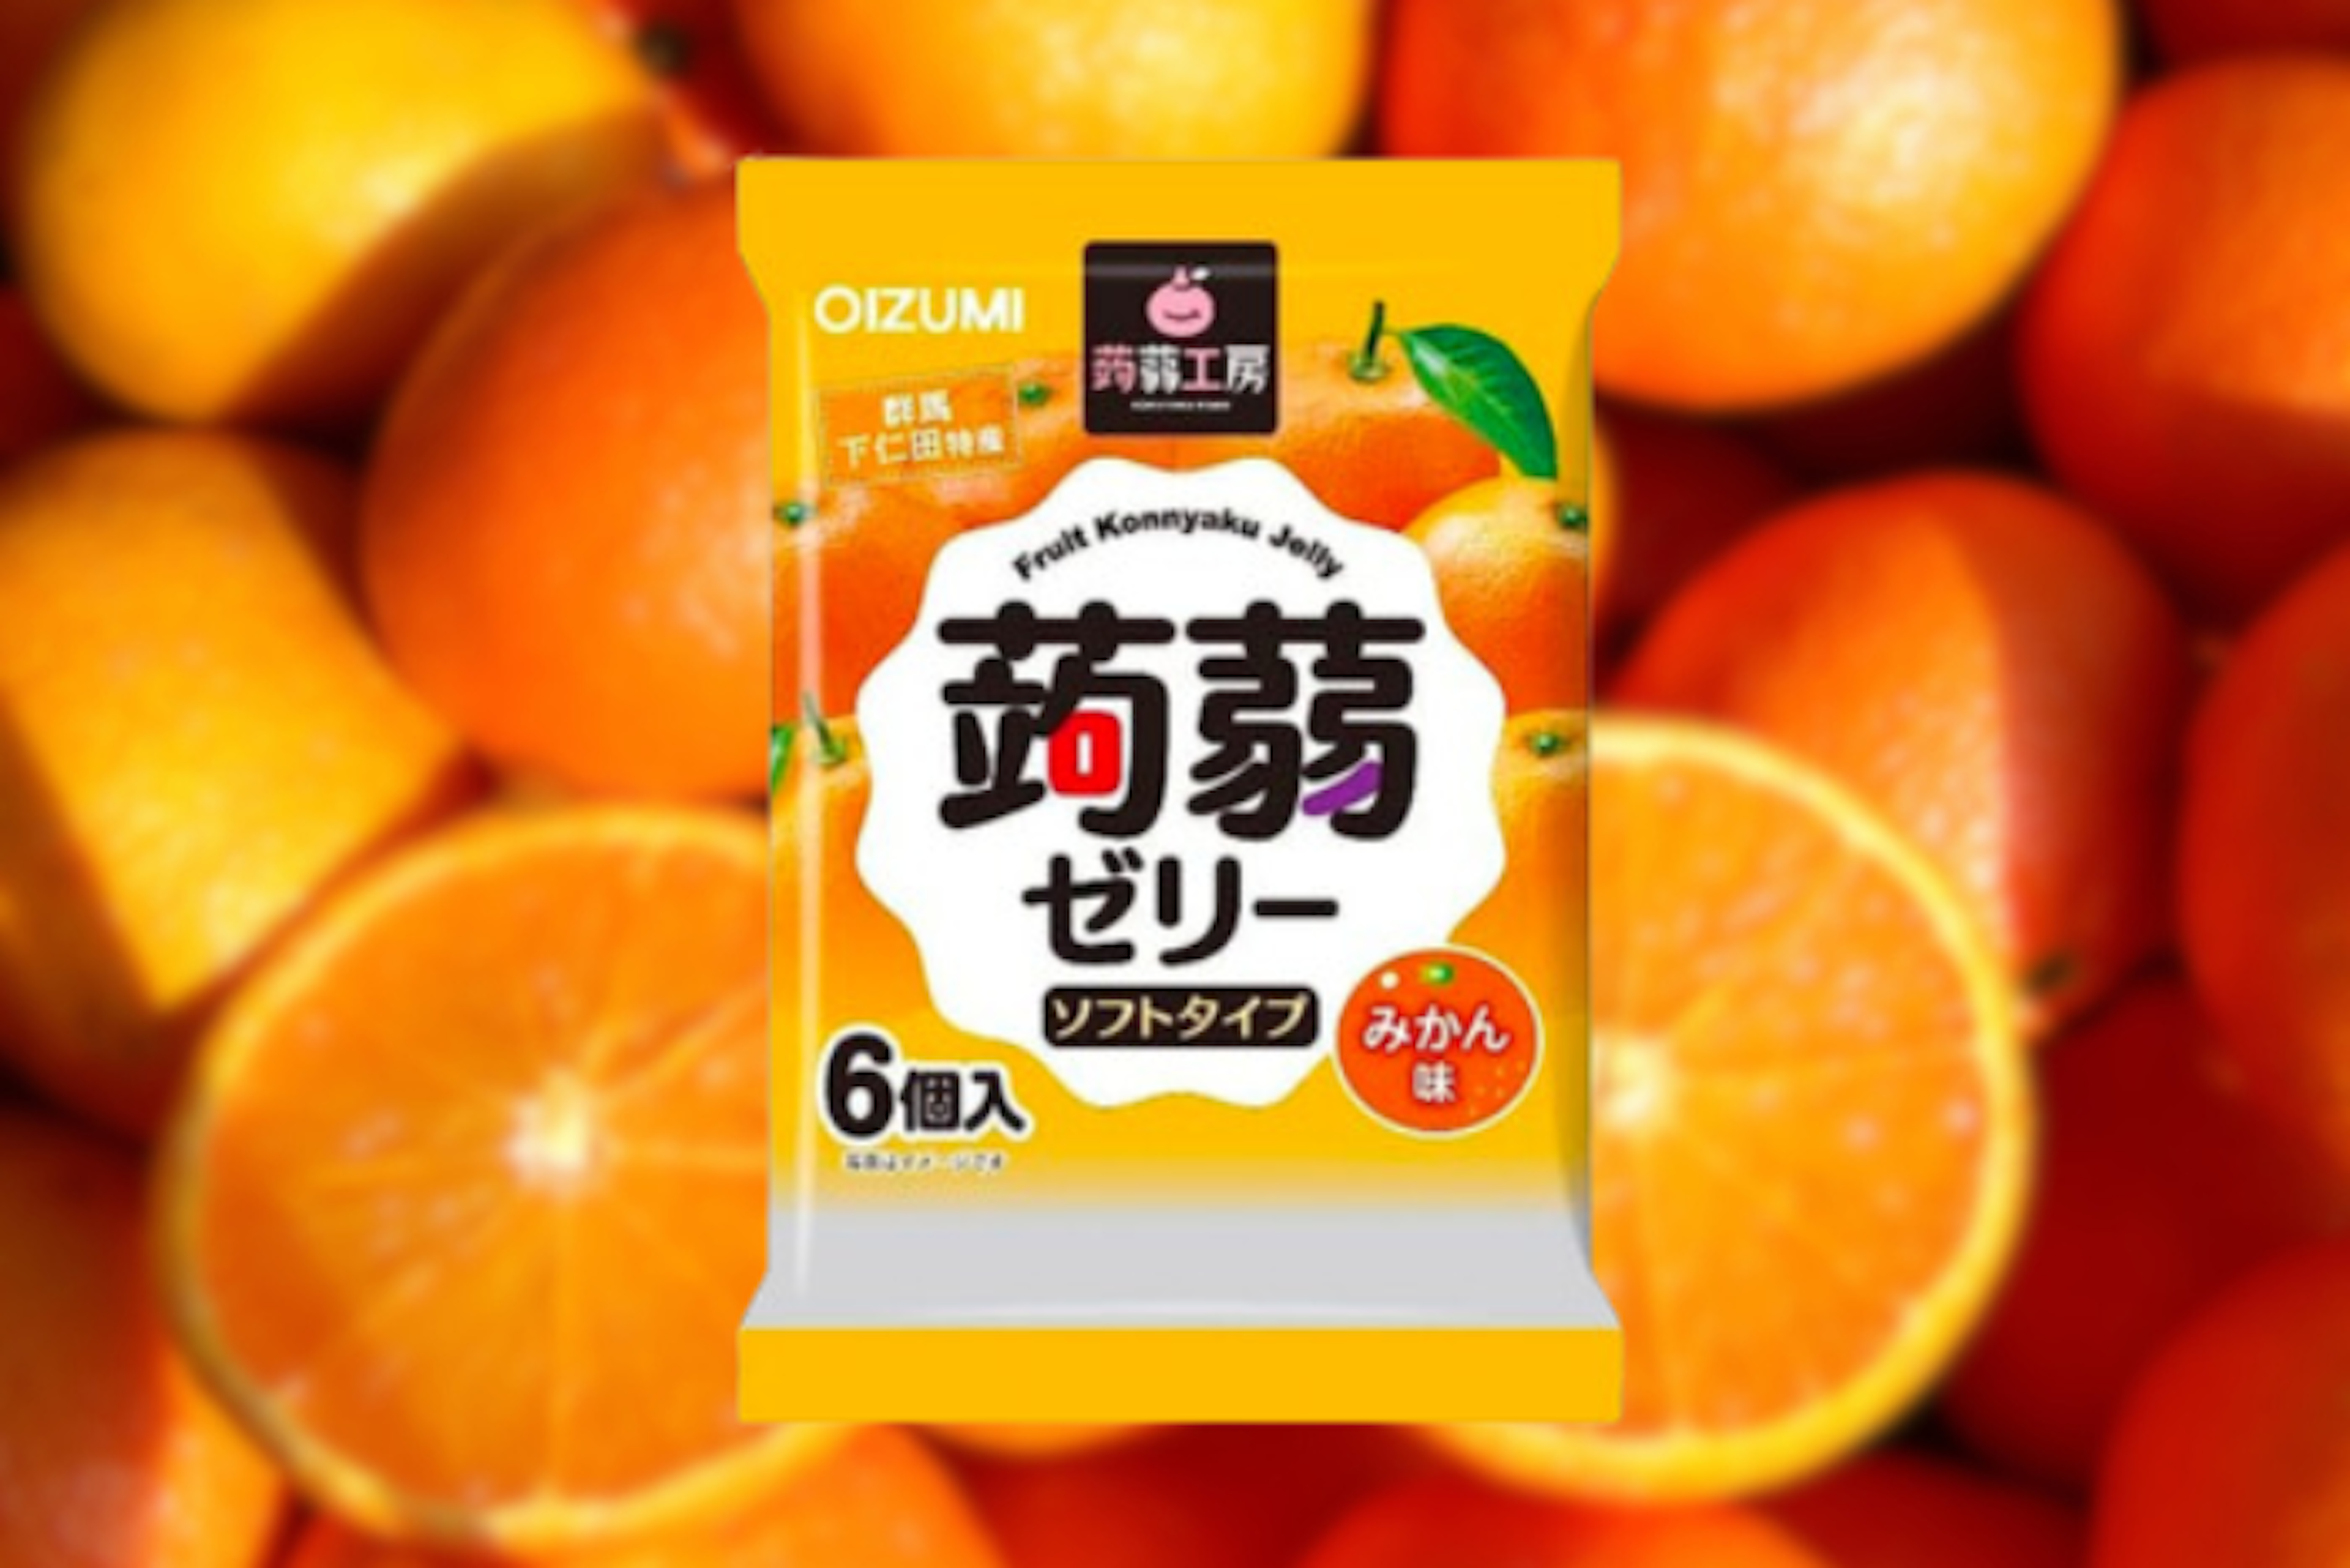 OIZUMI Konjac Jelly Mandarin 106g - Low calorie and healthy snack